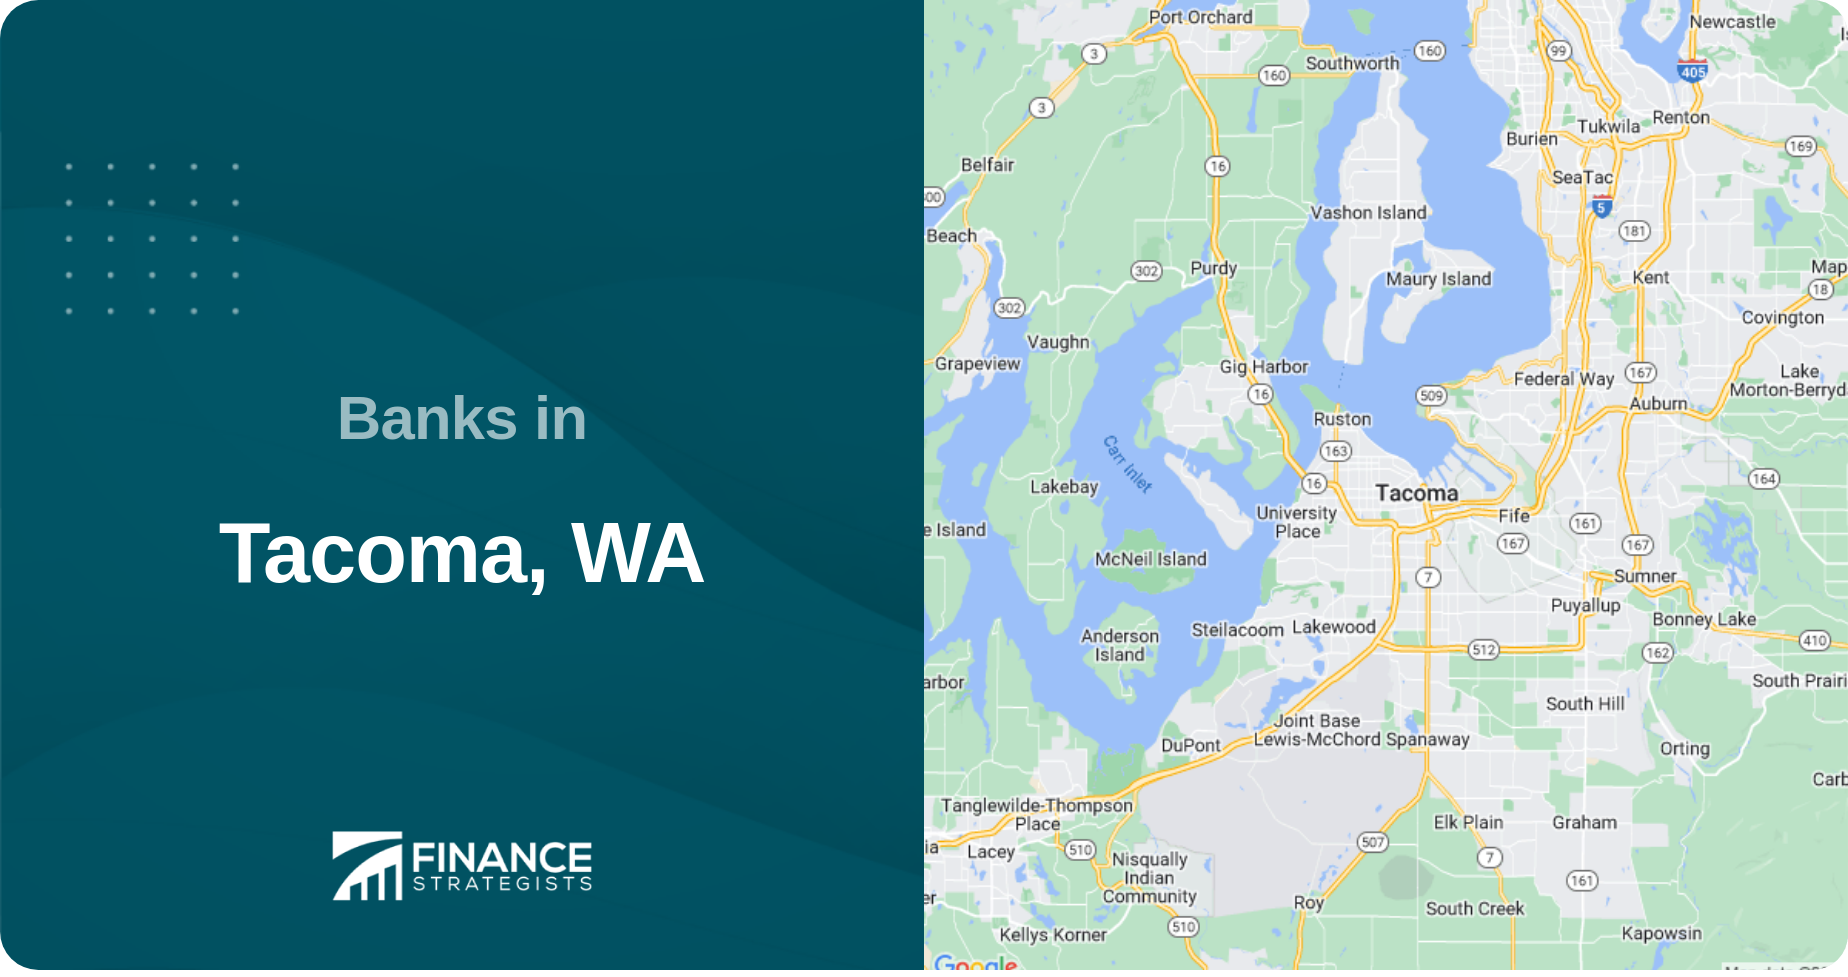 Banks in Tacoma, WA